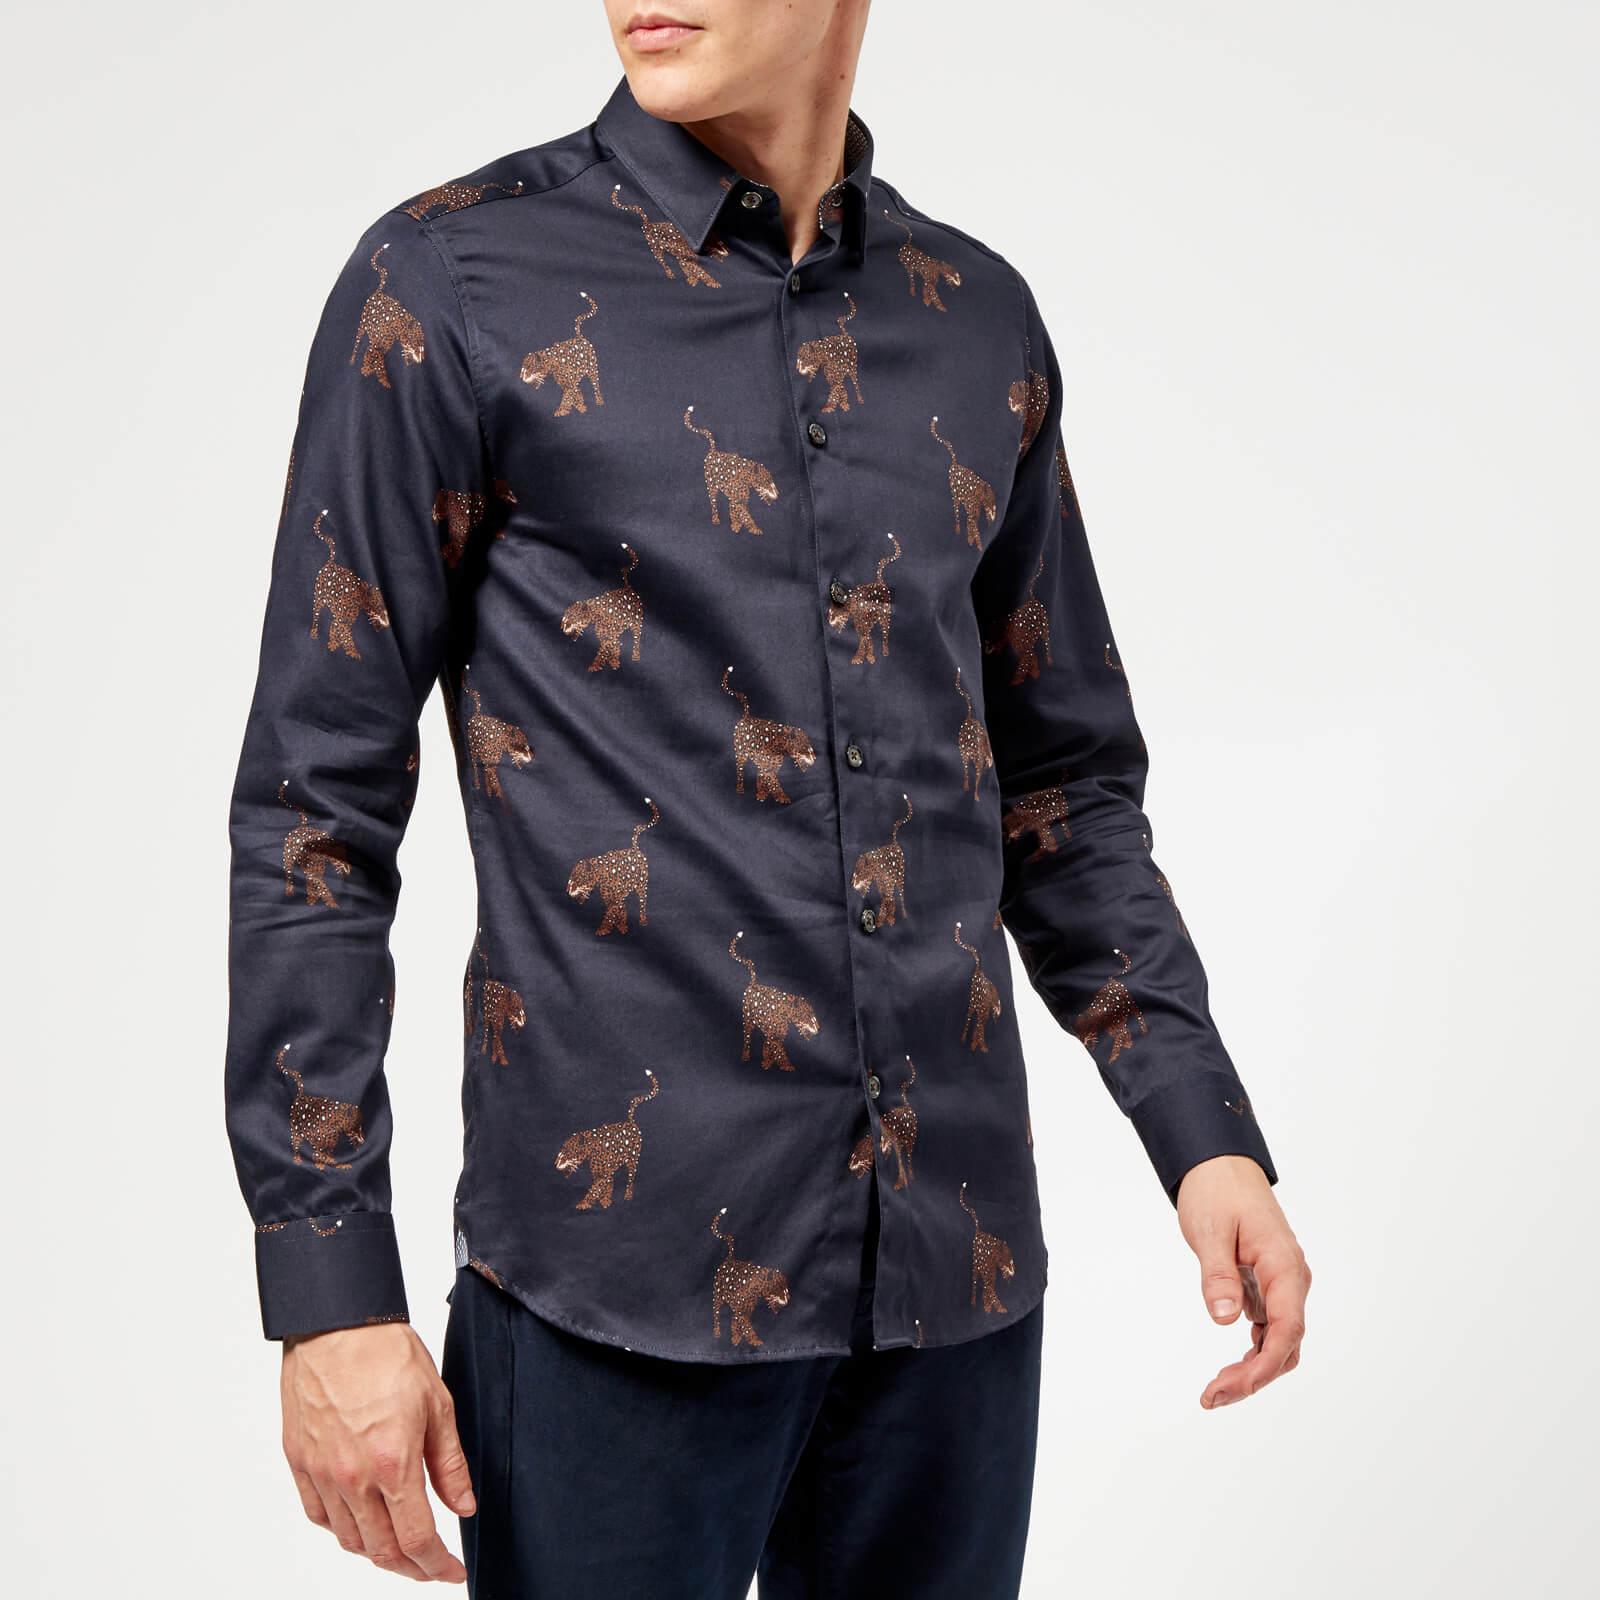 Ted Baker Leopard Print Cotton Shirt in Navy (Blue) for Men - Lyst